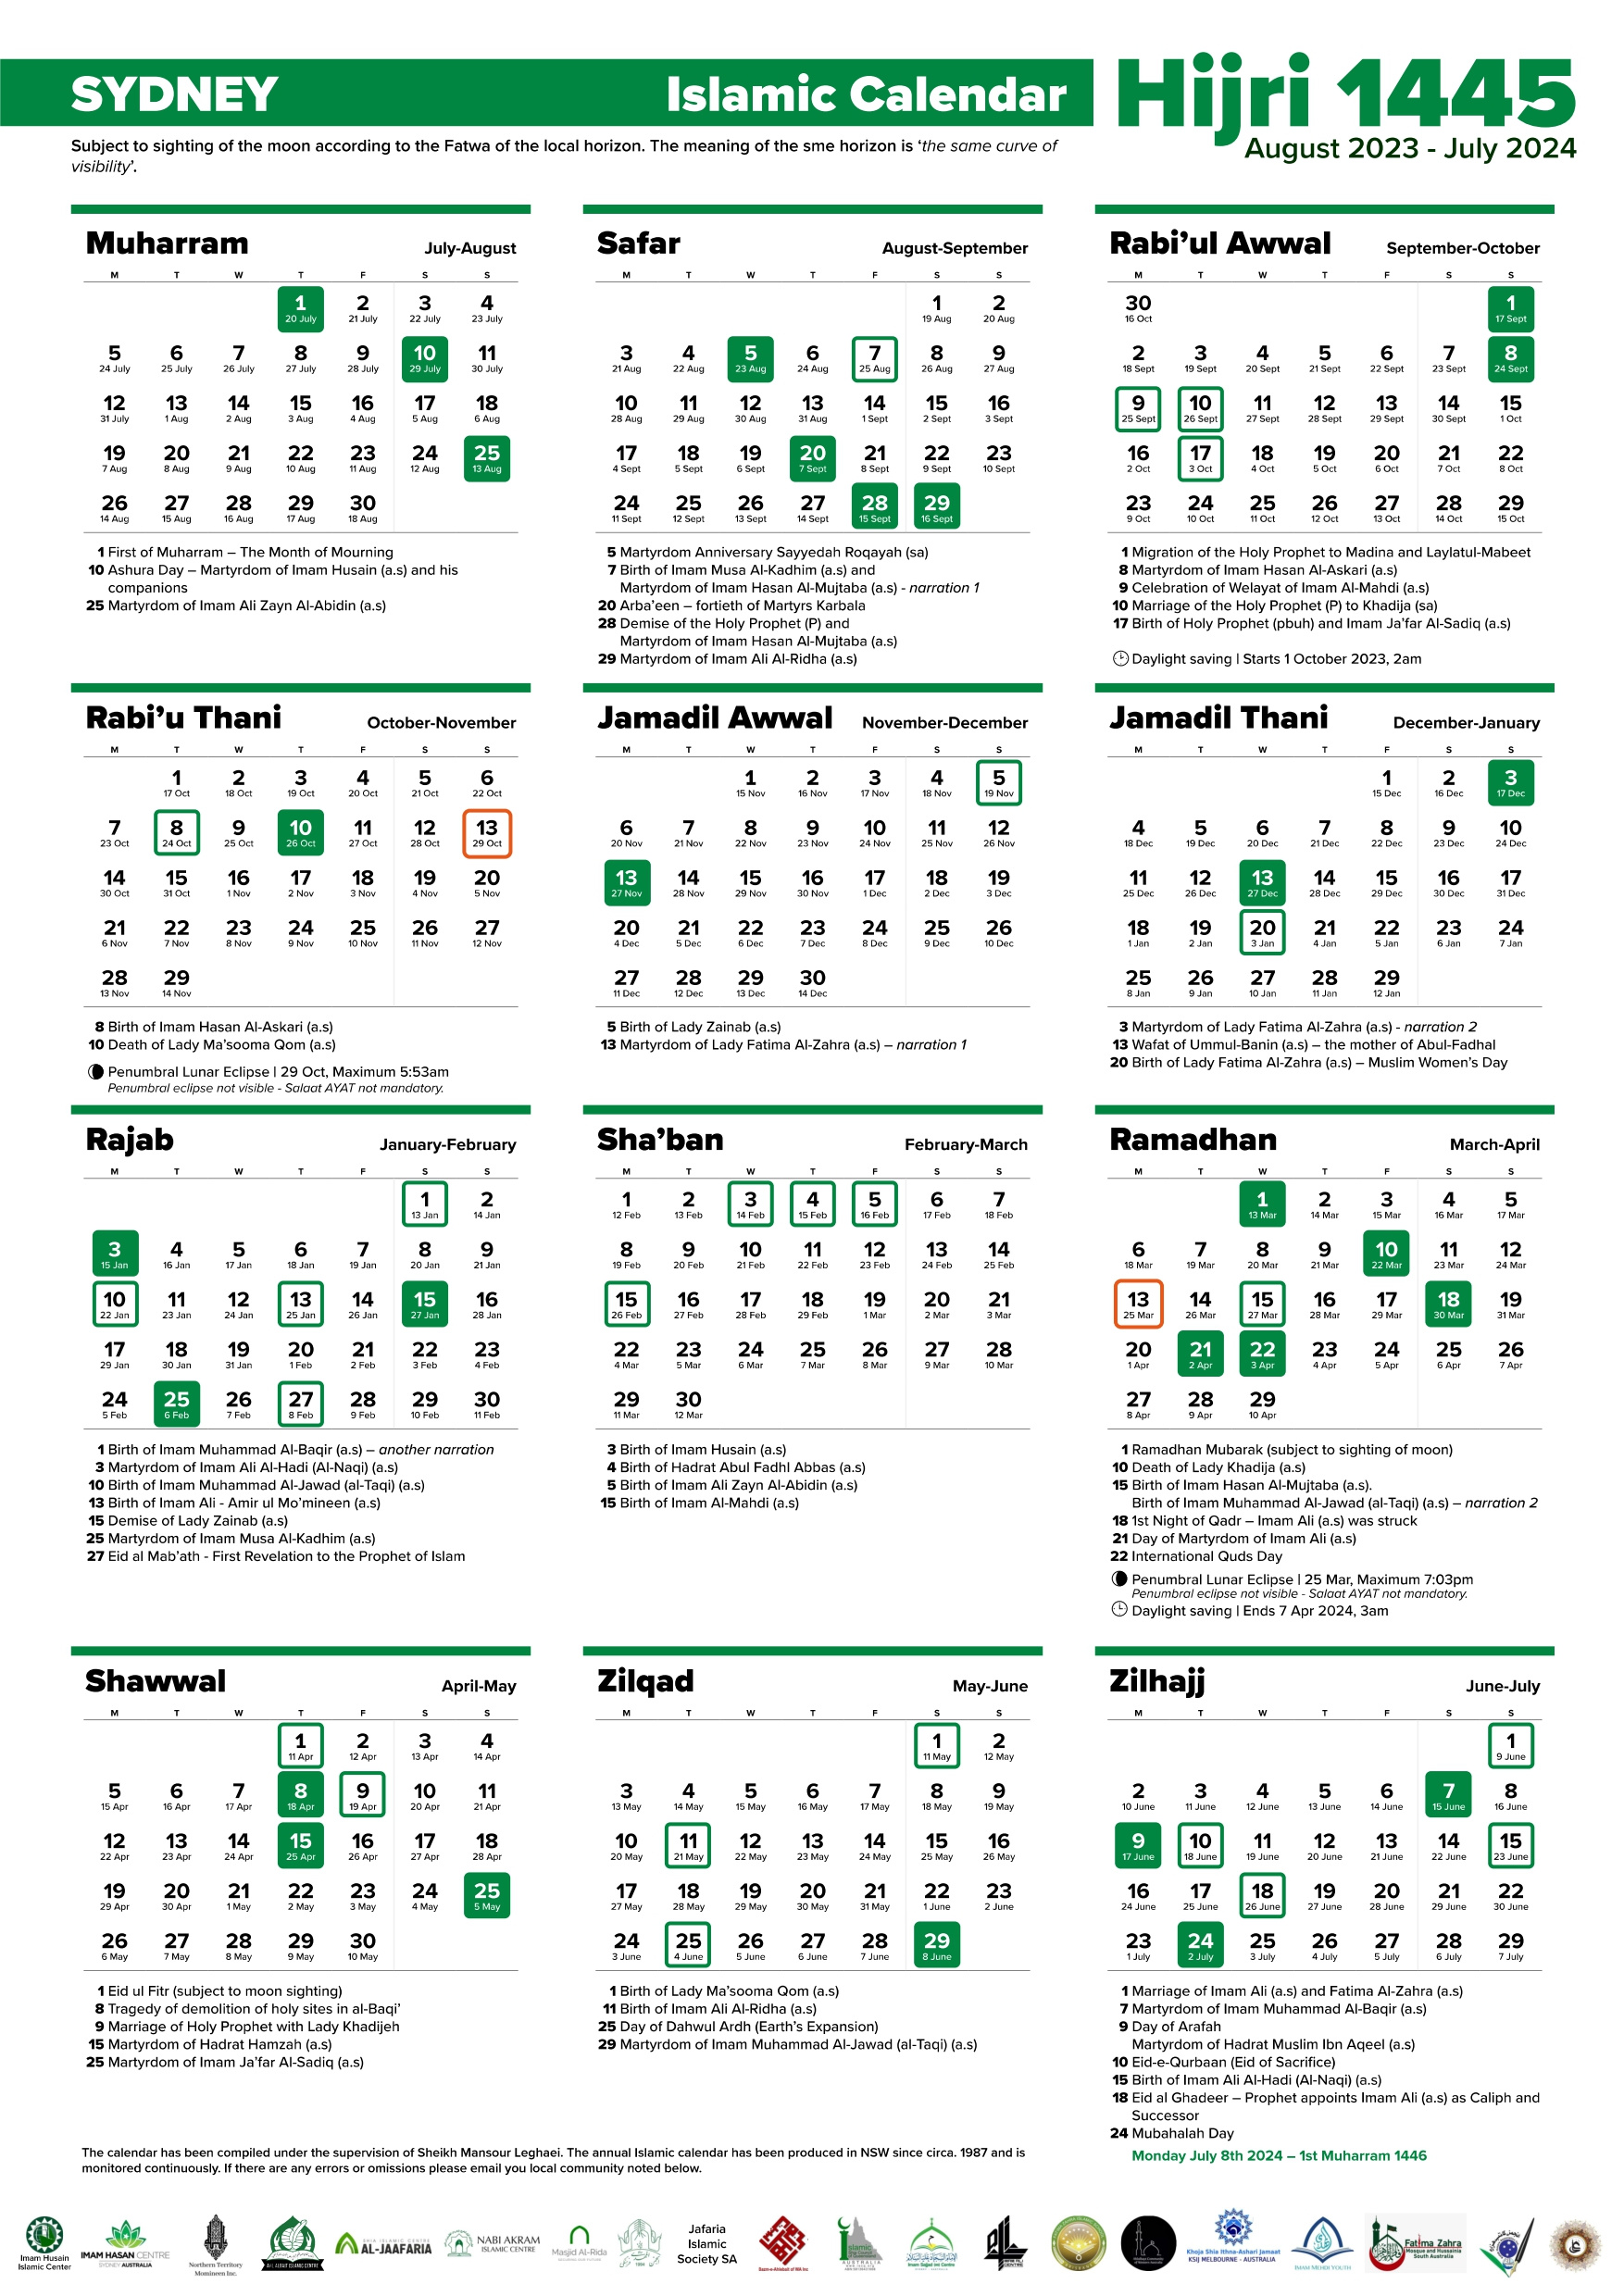 Annual Islamic Calendar 1445 Ah / 2023-2024 Ad – Imam Husain with regard to 23 July 2024 In Islamic Calendar